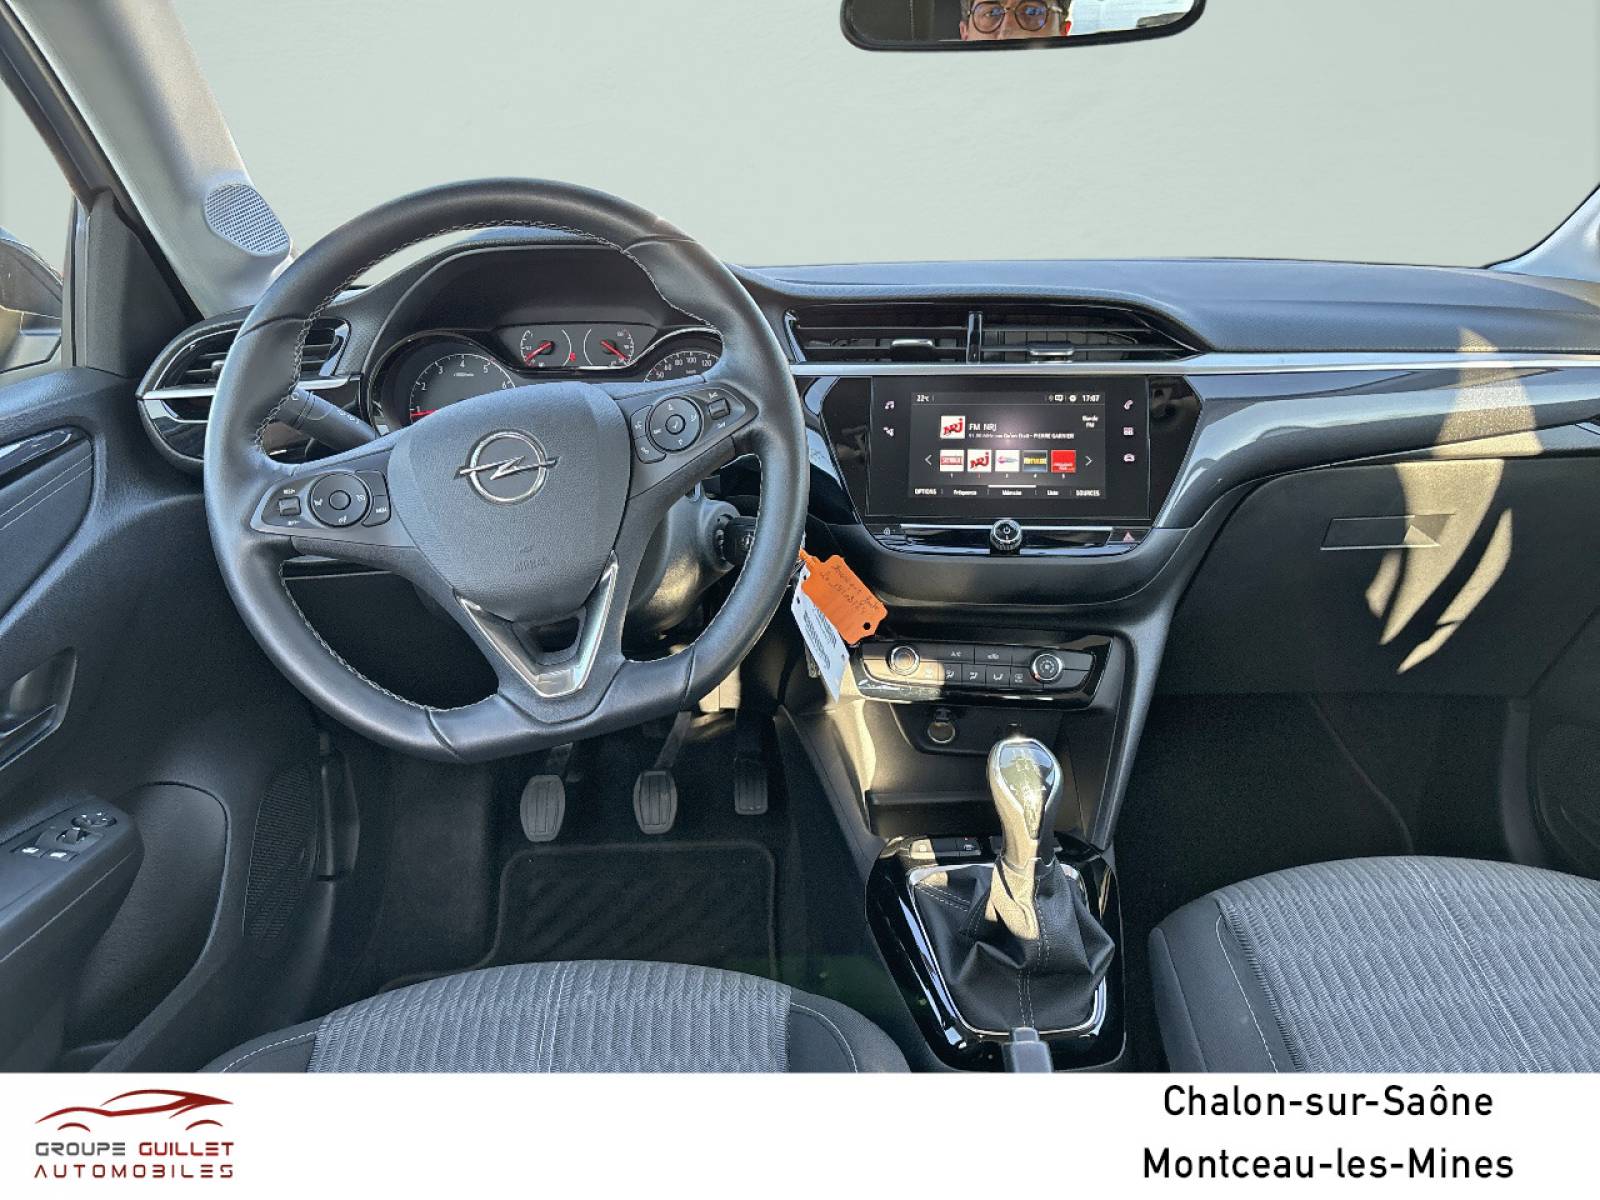 OPEL Corsa 1.2 75 ch BVM5 - véhicule d'occasion - Groupe Guillet - Opel Magicauto Chalon - 71380 - Saint-Marcel - 8